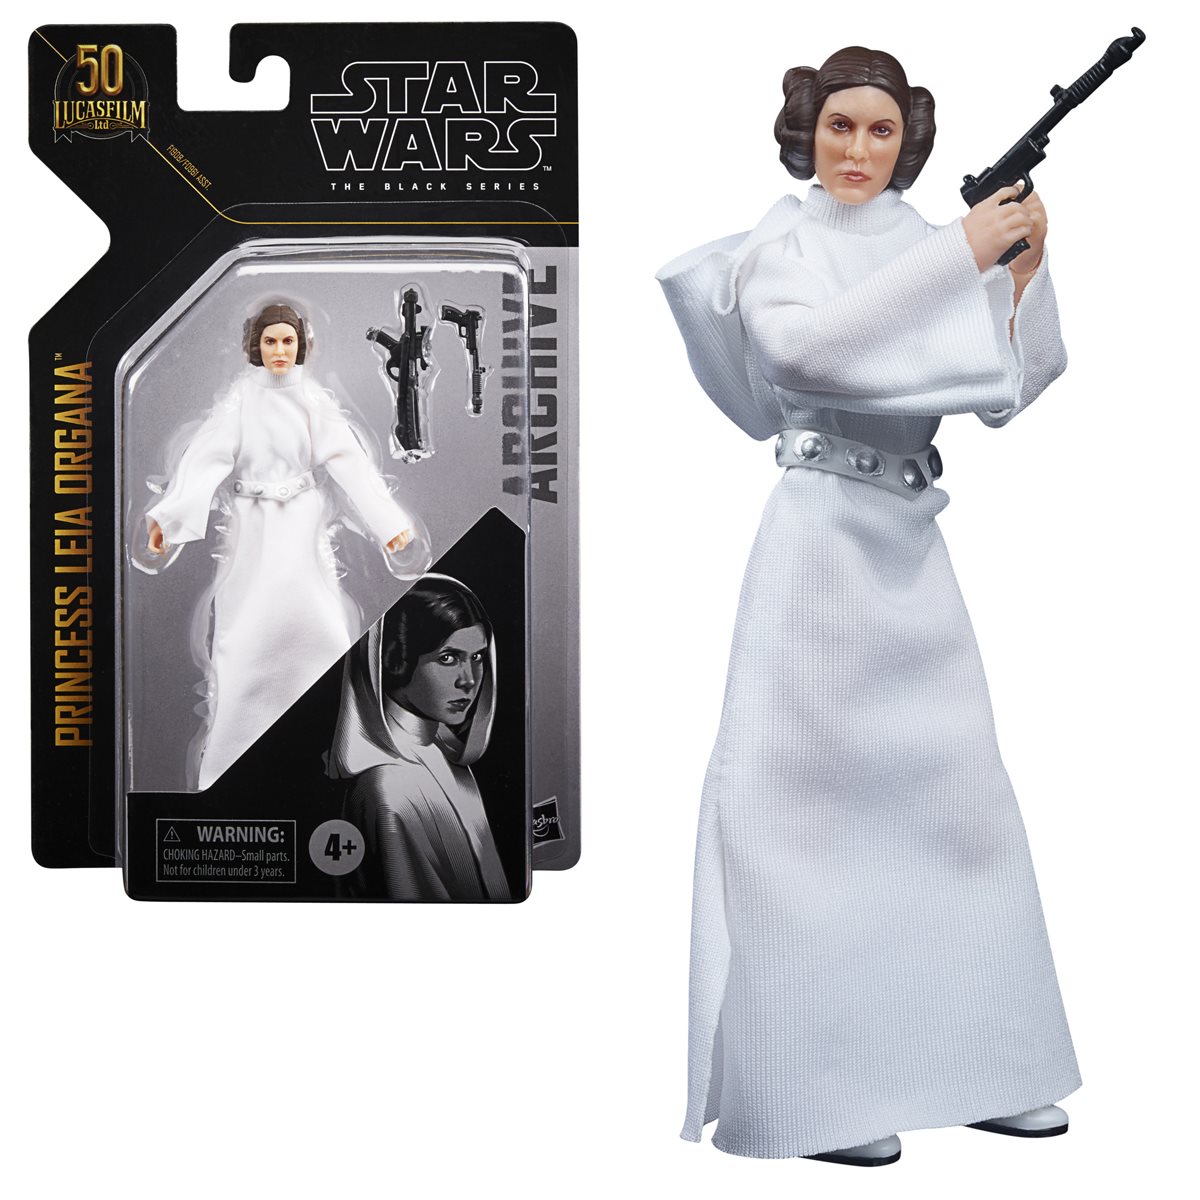 Hasbro Star Wars The Black Series Princess Leia Organa Action Figure for sale online 